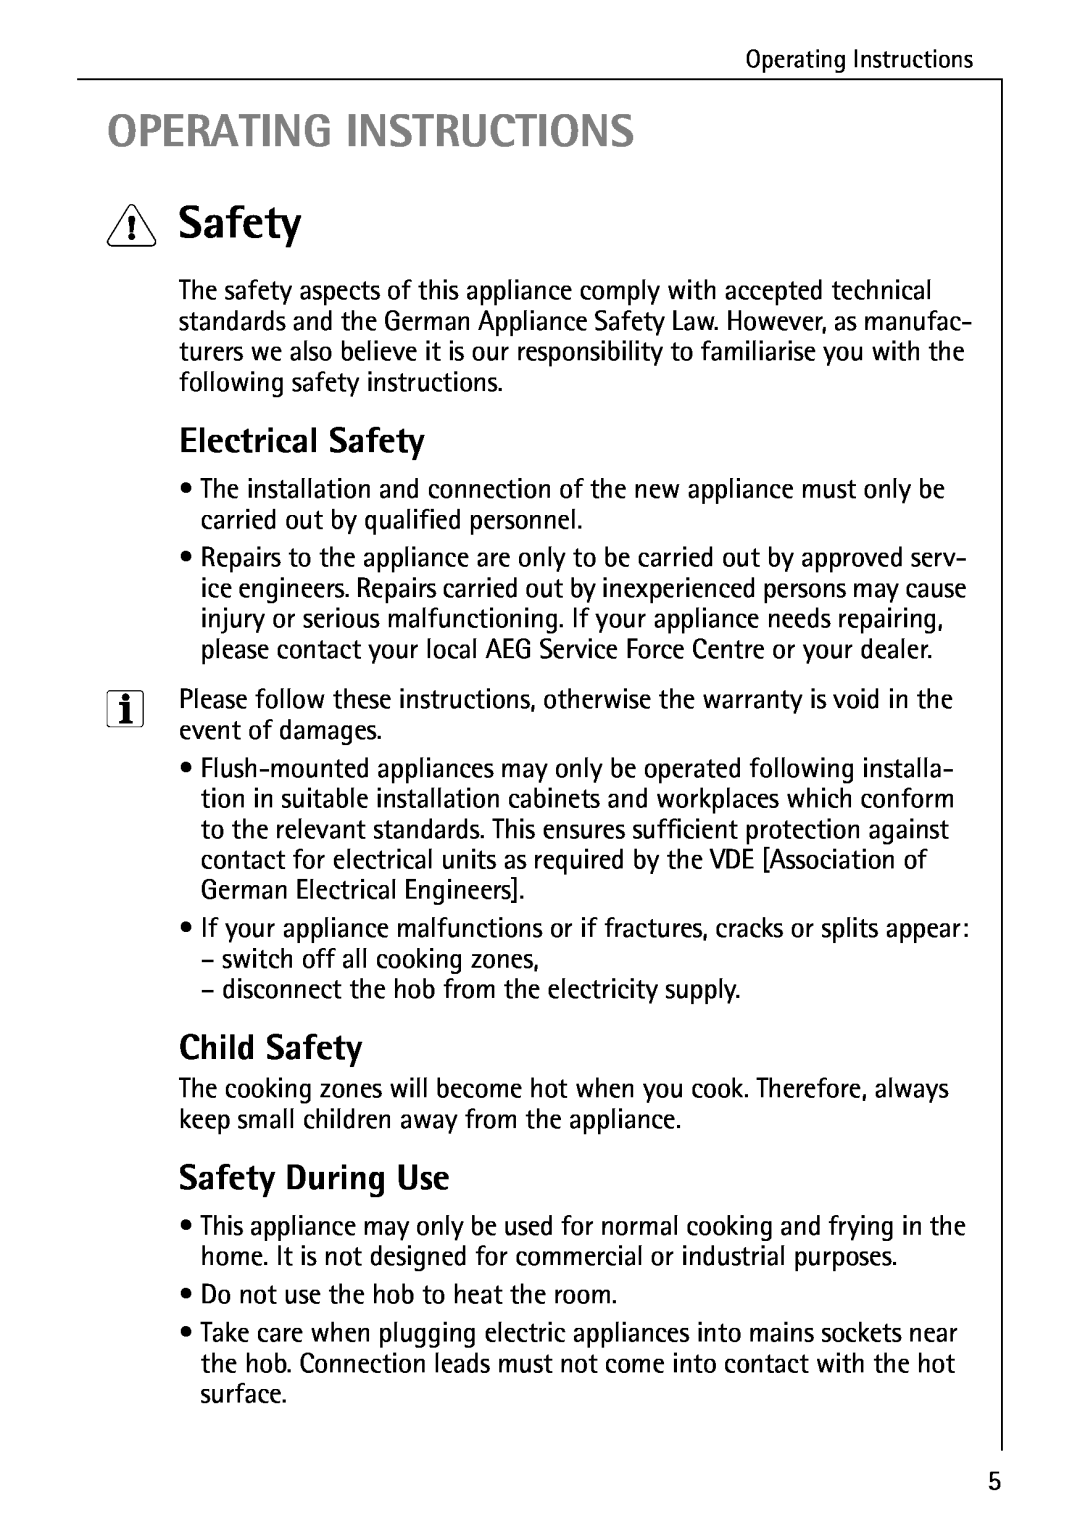 Electrolux C65030K Operating Instructions, 1Safety, Electrical Safety, Child Safety, Safety During Use 